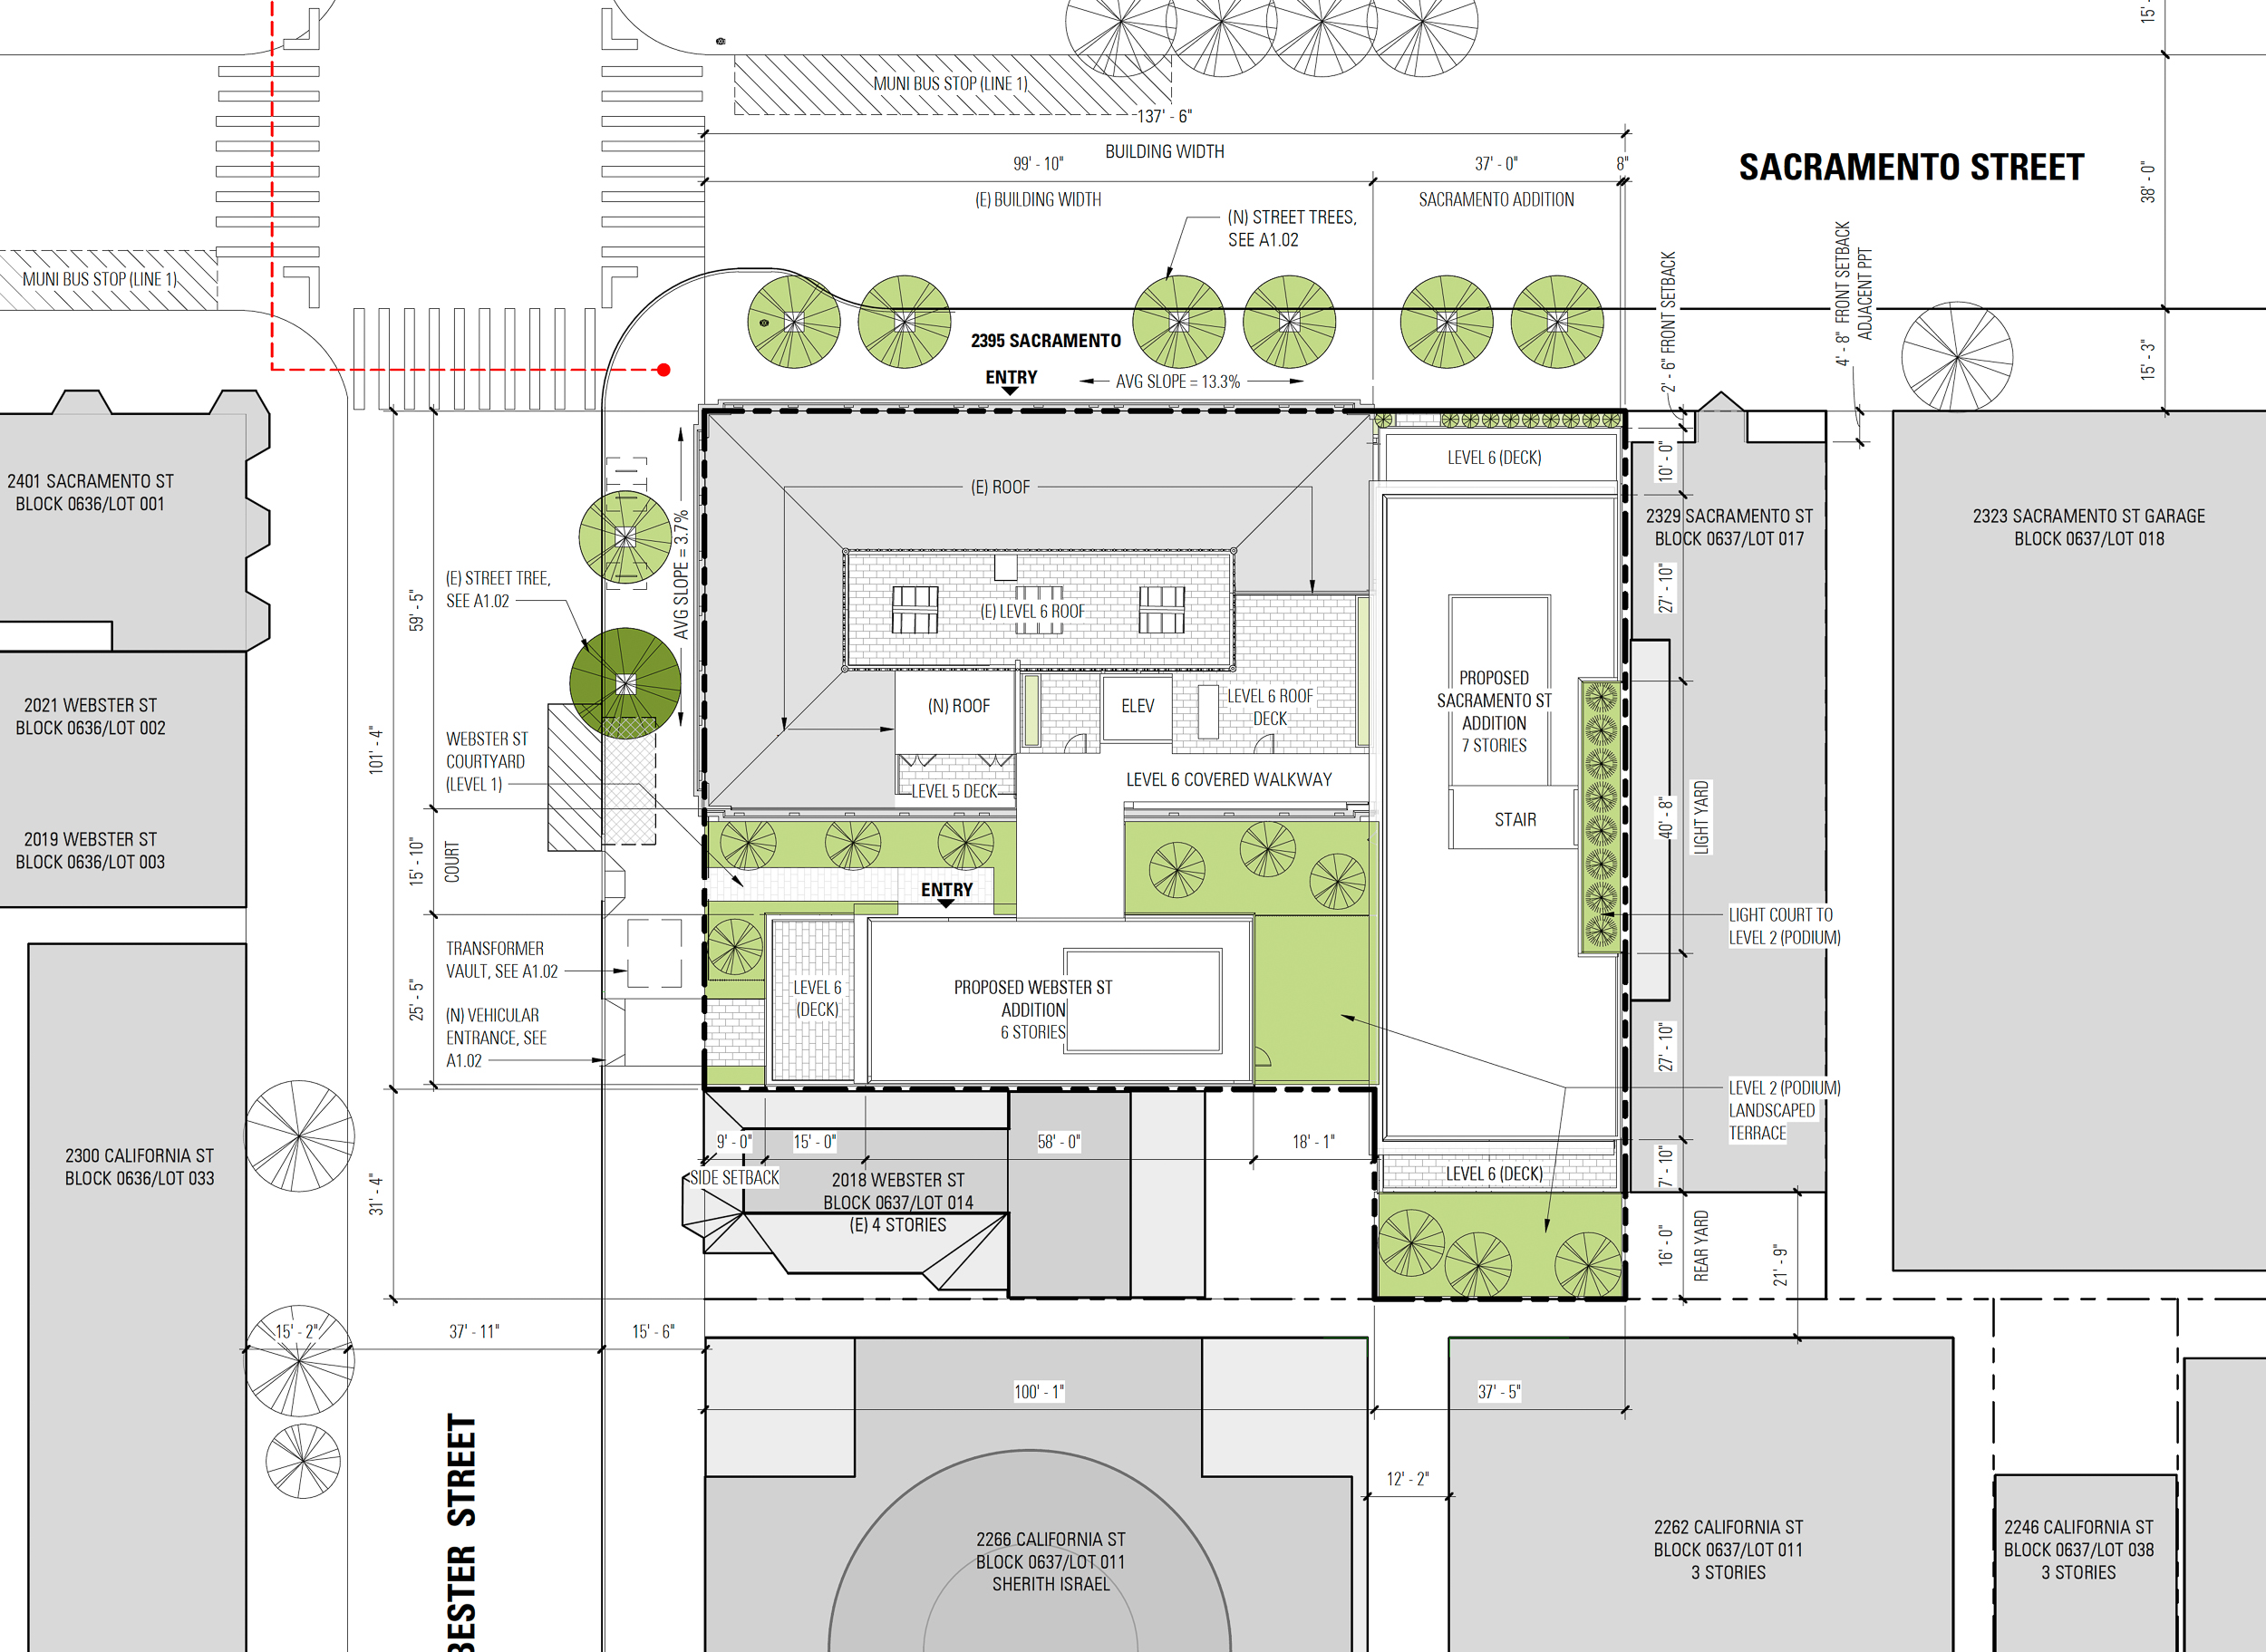 2395 Sacramento Street site map, illustration by BAR Architects